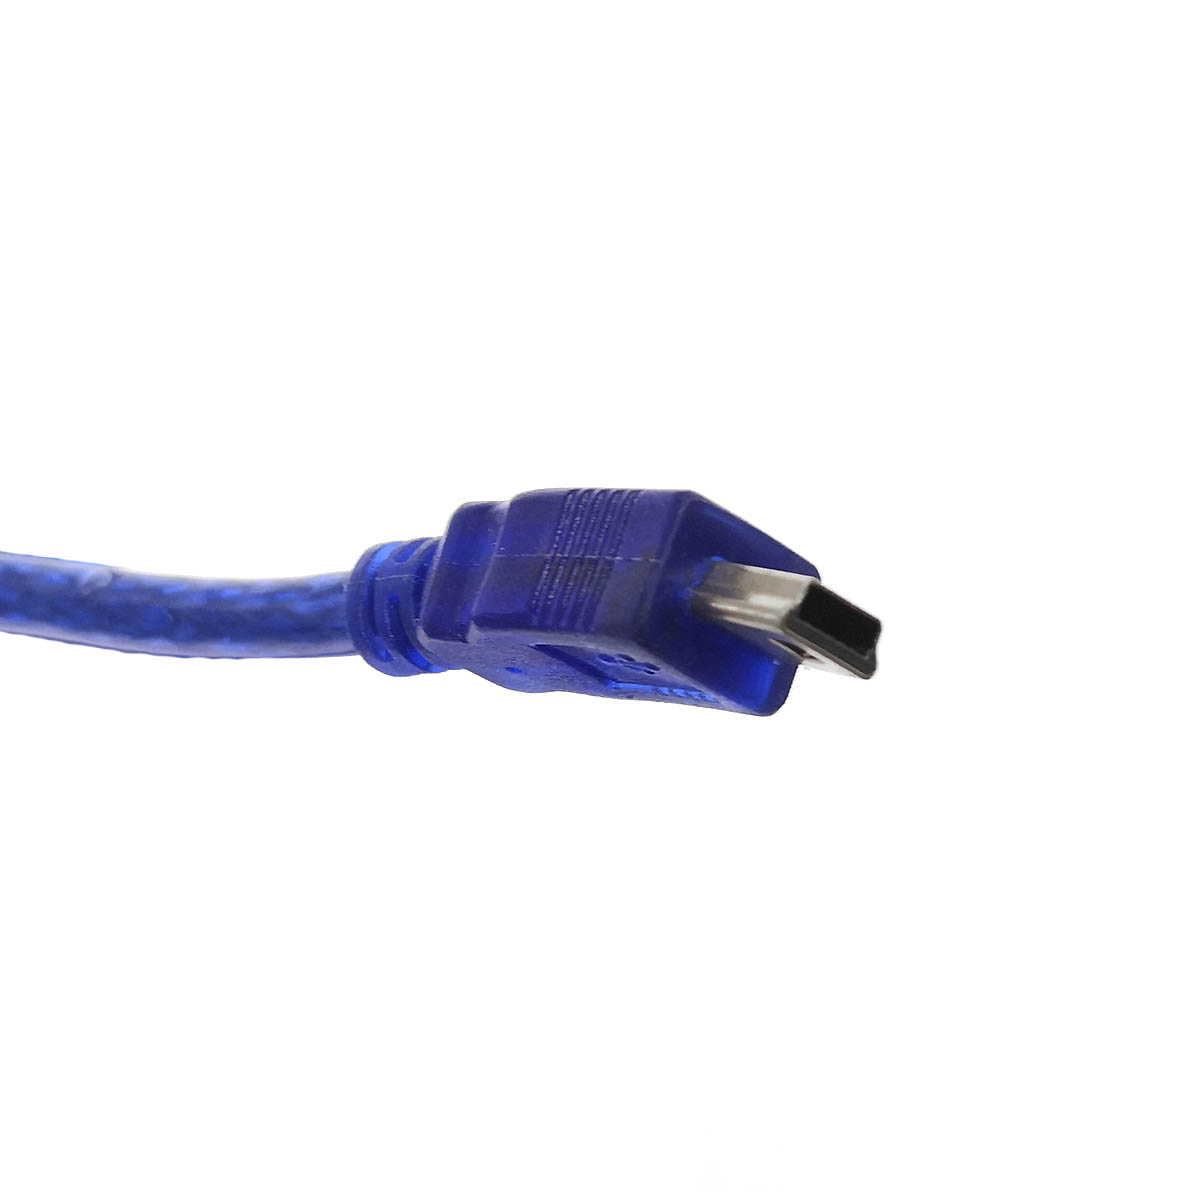 Кабель USB - Mini USB, длина 1.5 метра, с ферритовым фильтром, цвет синий